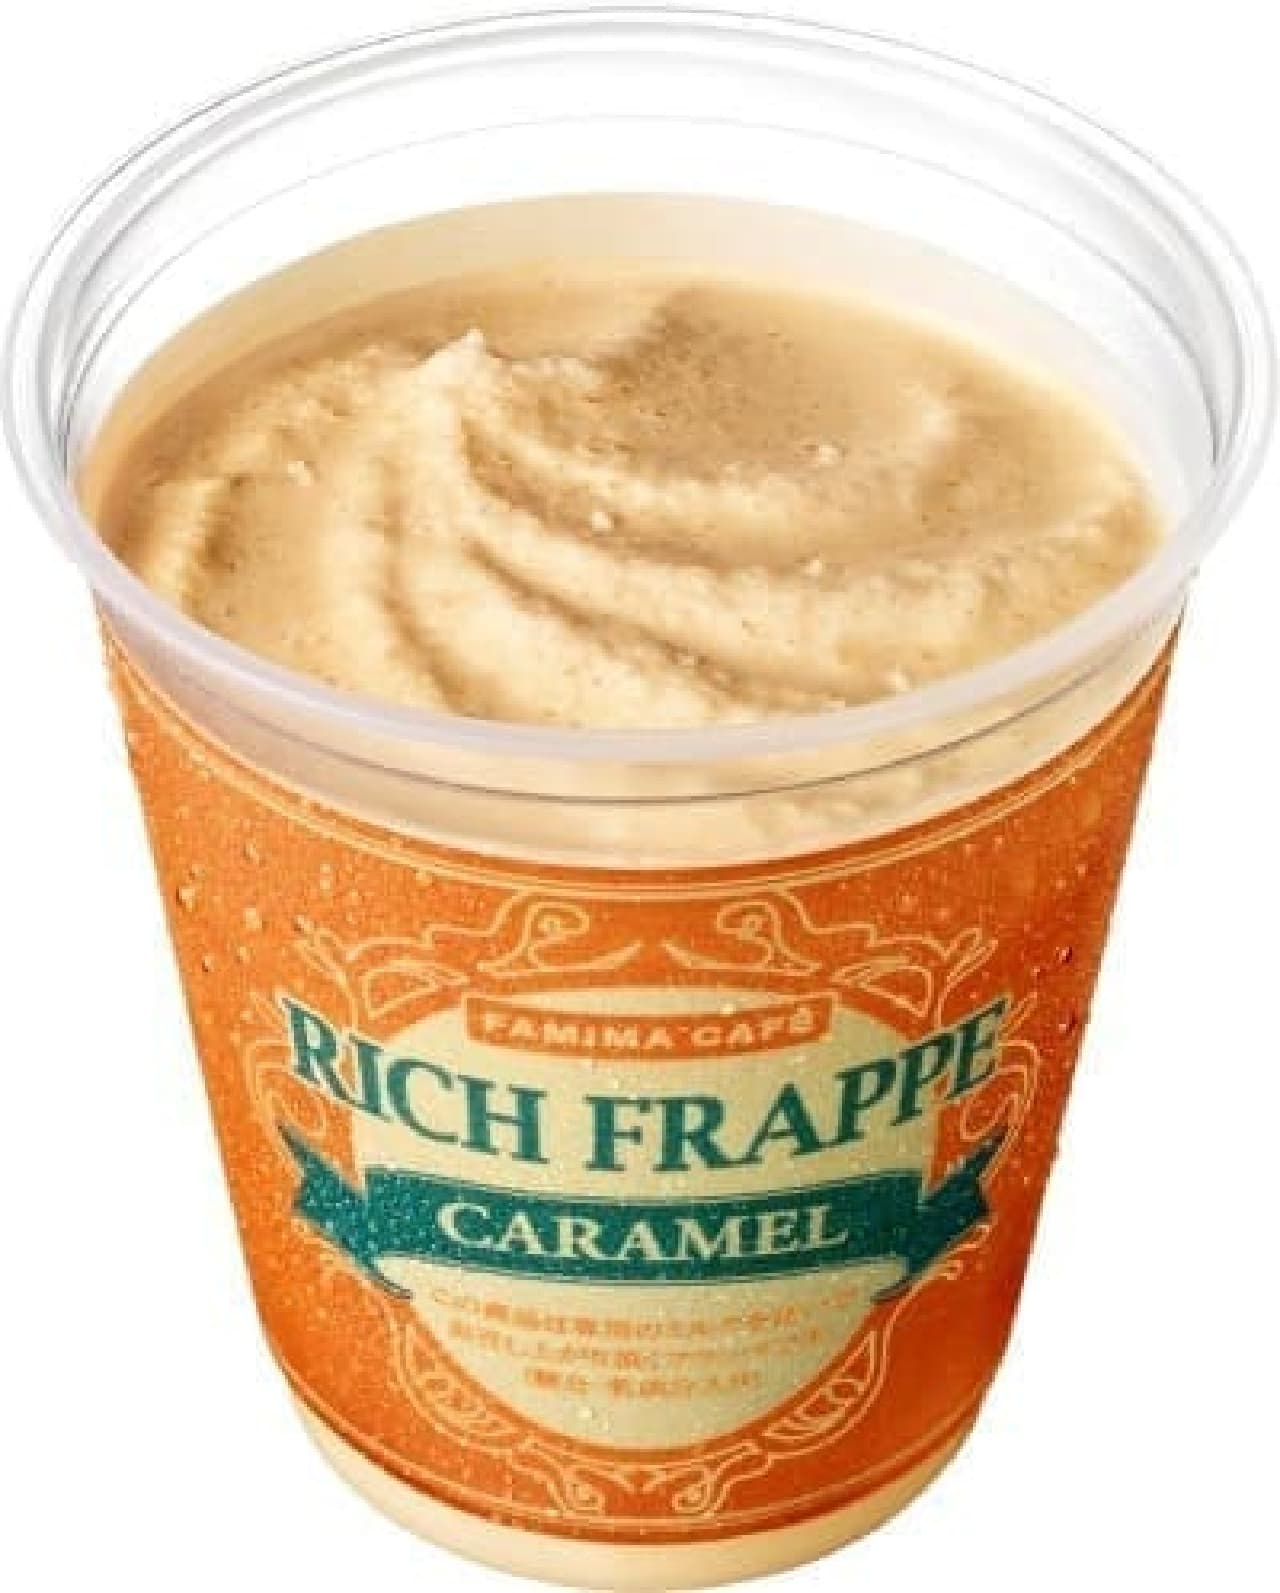 FamilyMart "Rich Frappe Caramel"